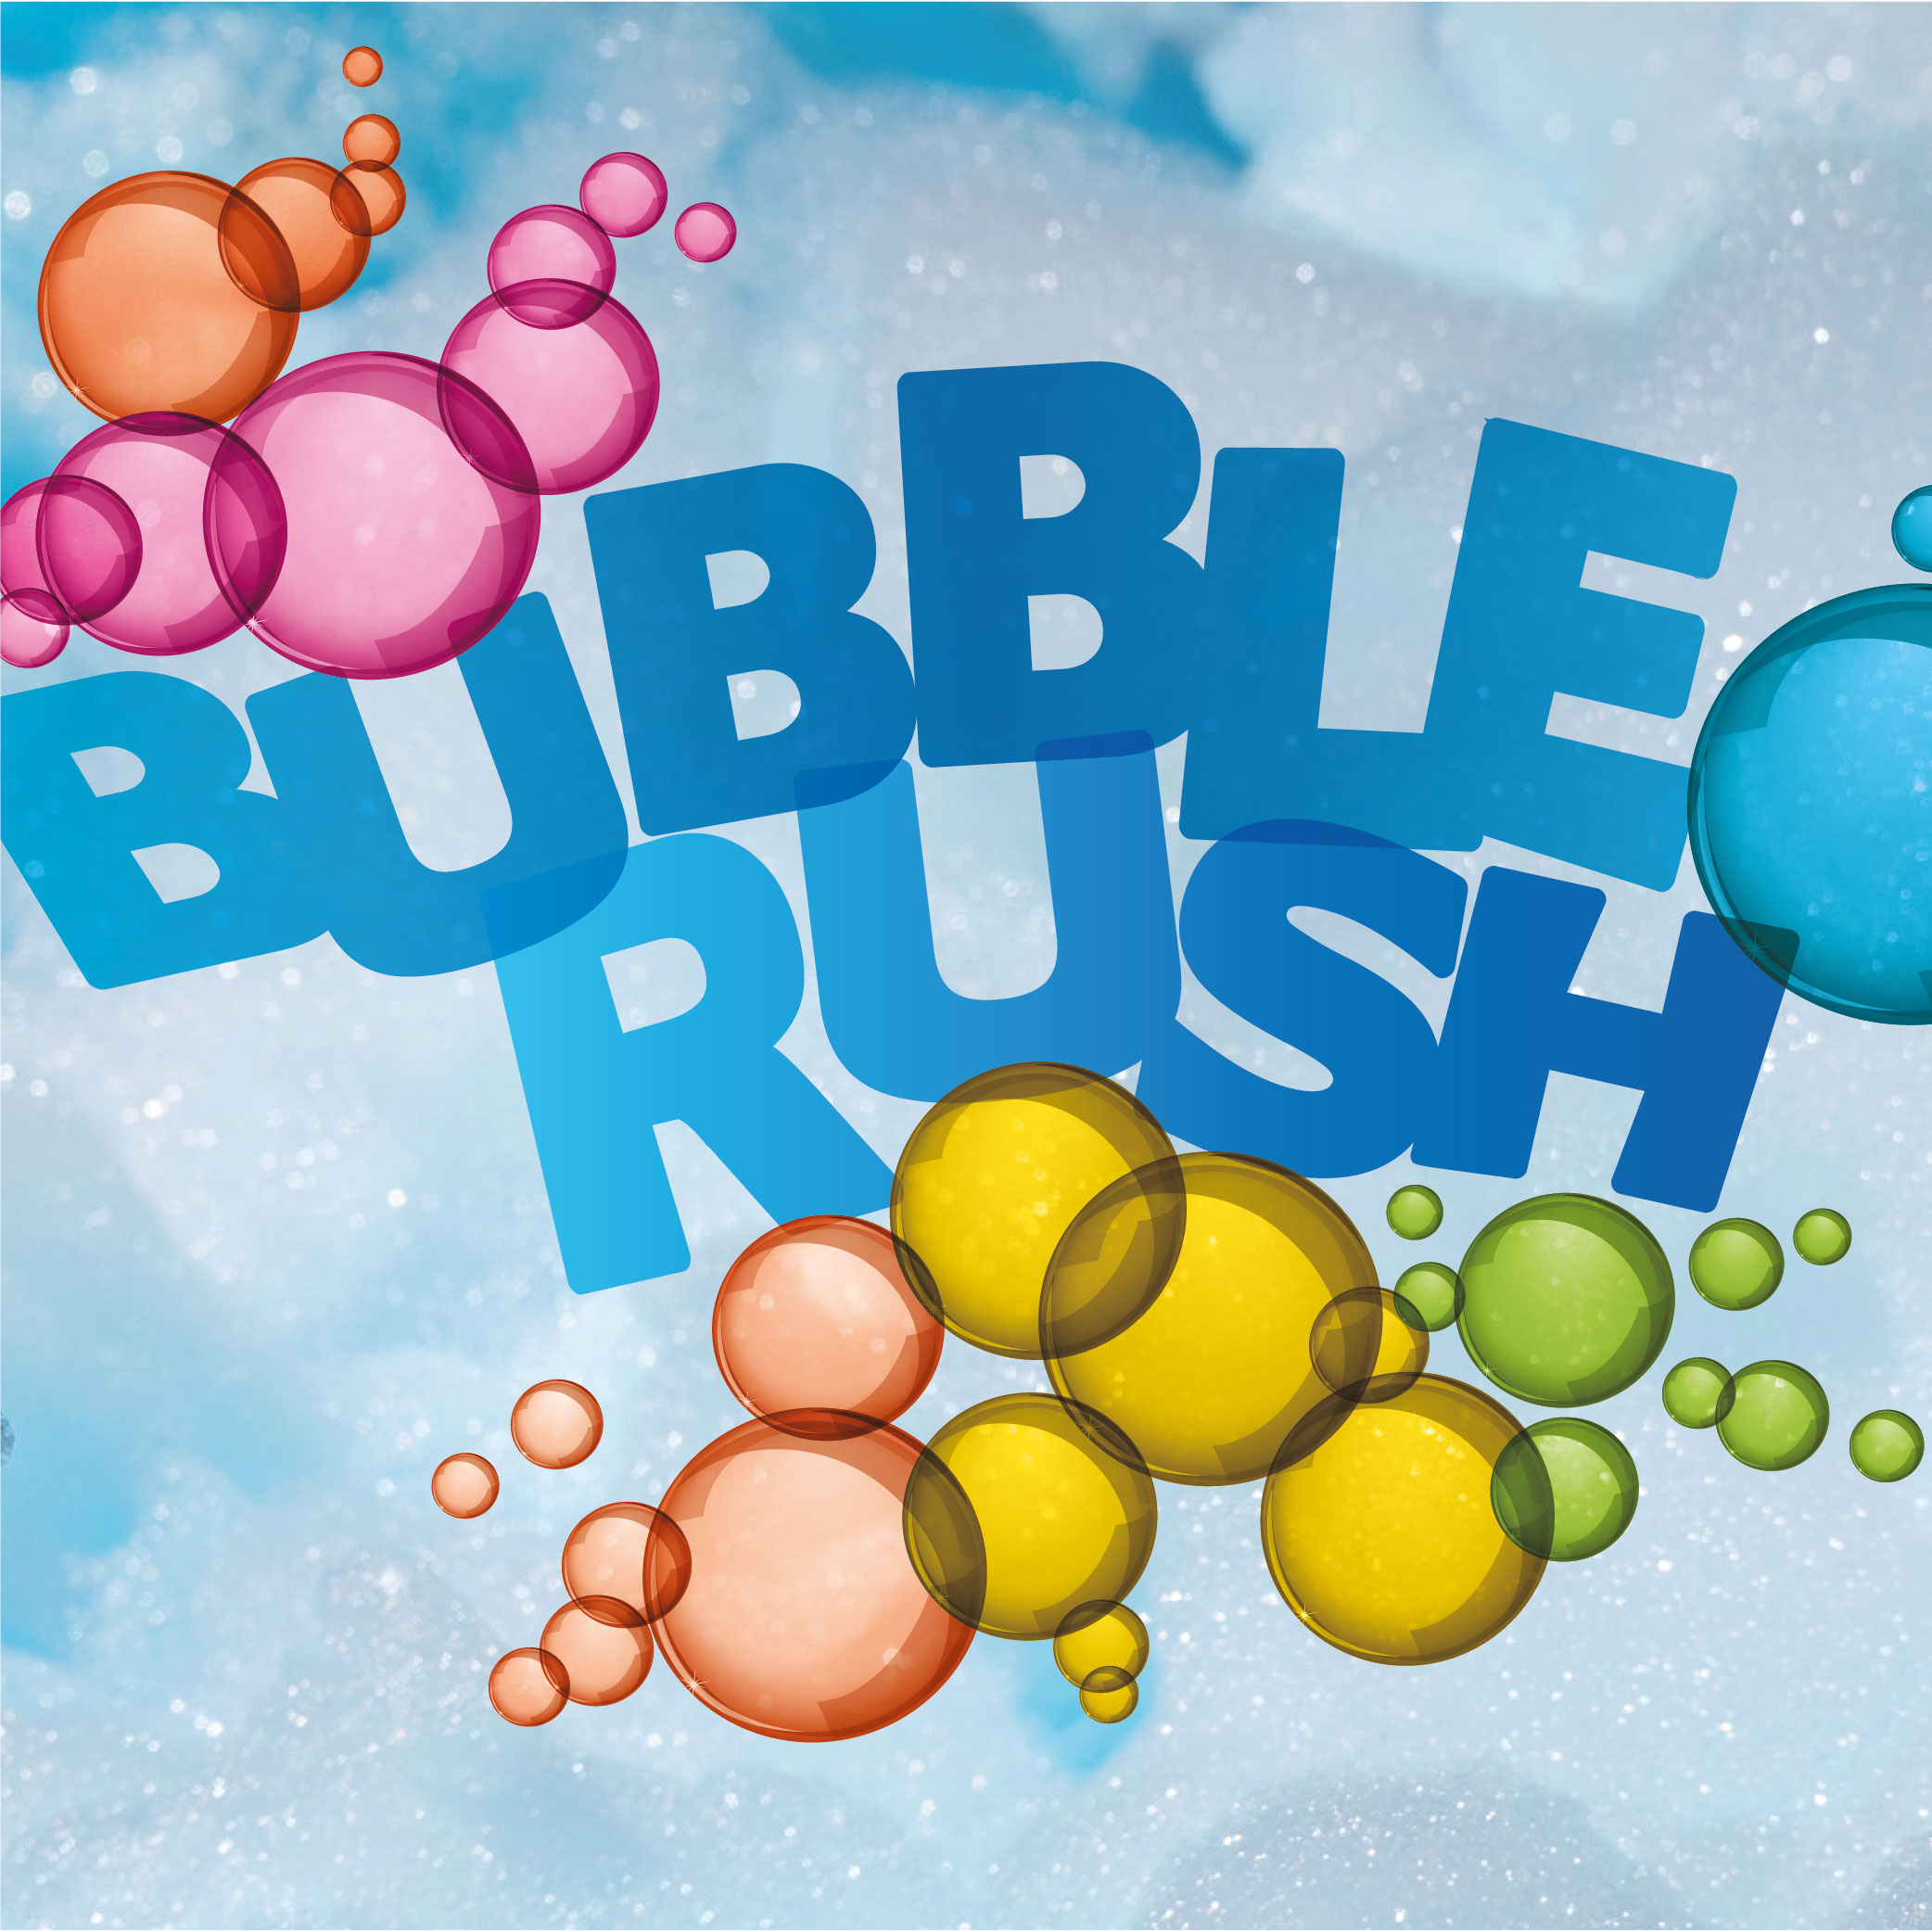 BubbleRush-003-website-square-design.jpg